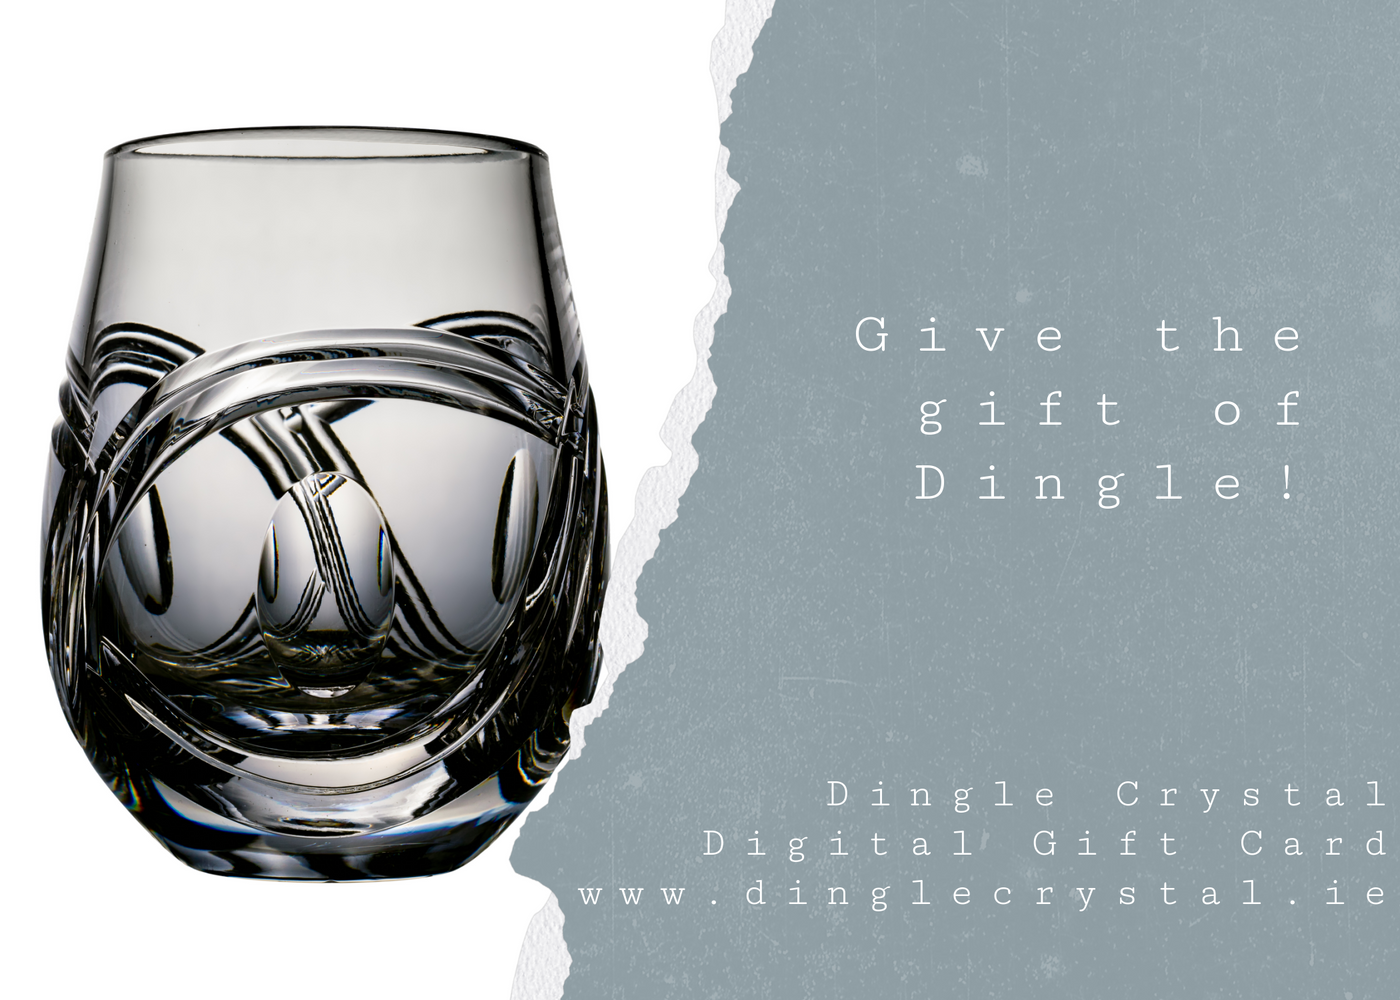 Dingle Crystal Digital Gift Card